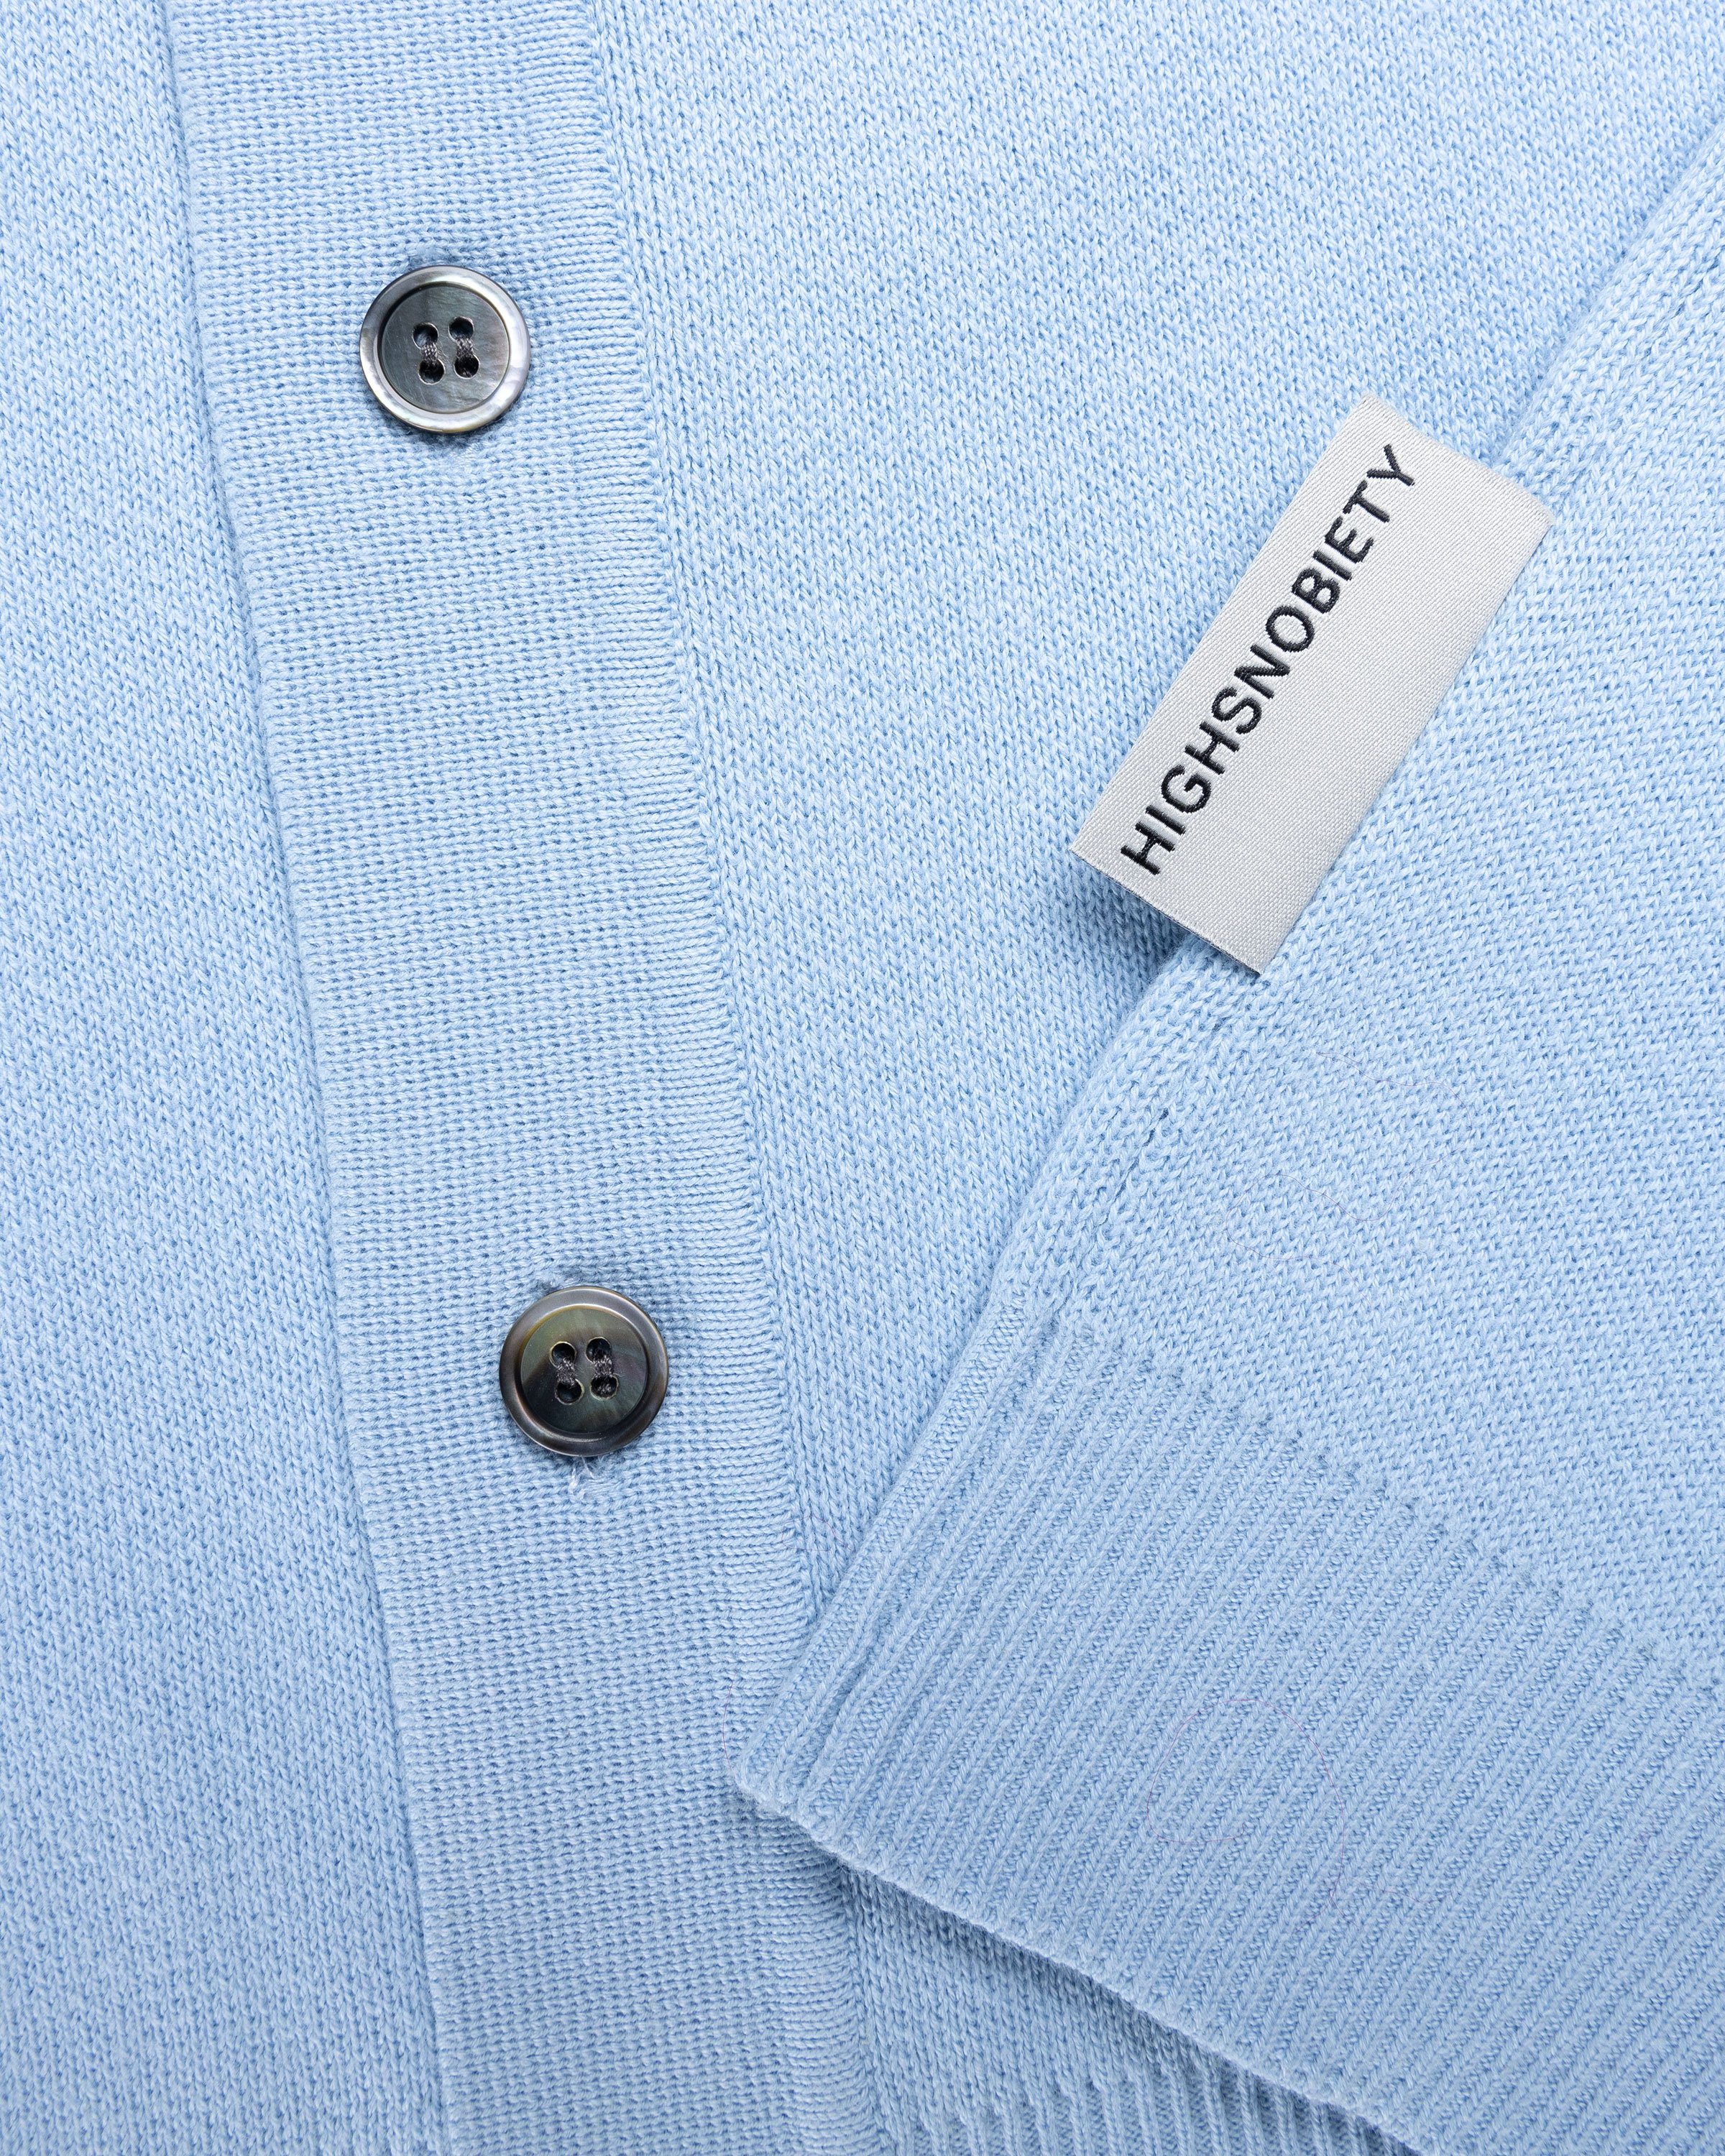 Highsnobiety HS05 - Cotton Knit Shirt Light blue - Clothing - Blue - Image 7